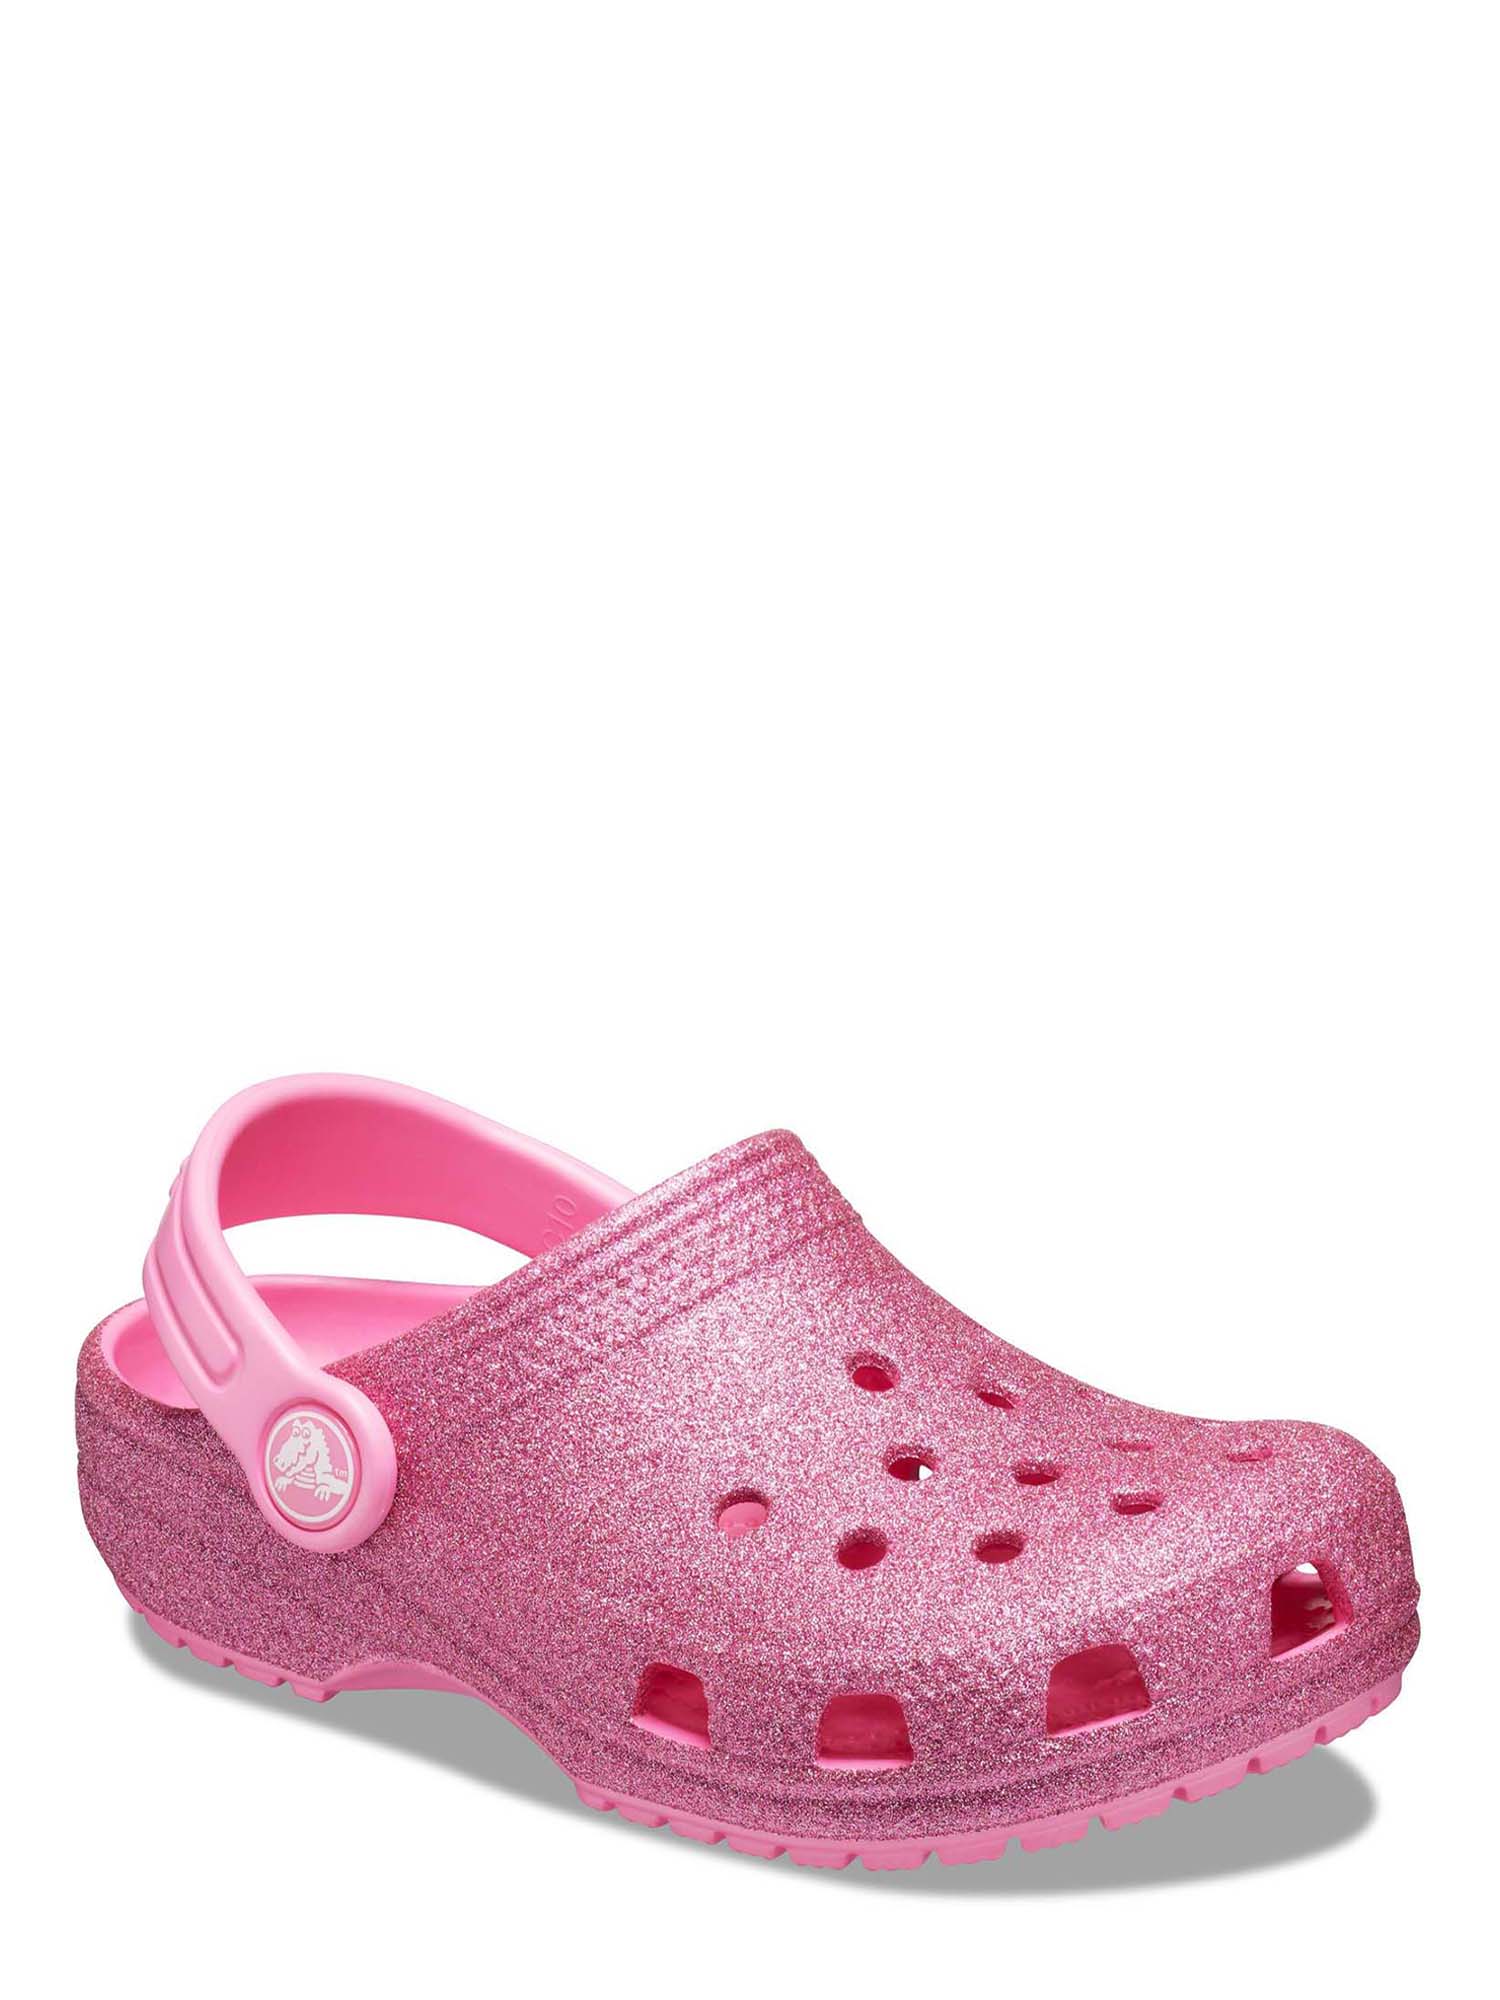 Crocs Toddler & Kids Classic Glitter Clog, Sizes 4-6 - image 1 of 4